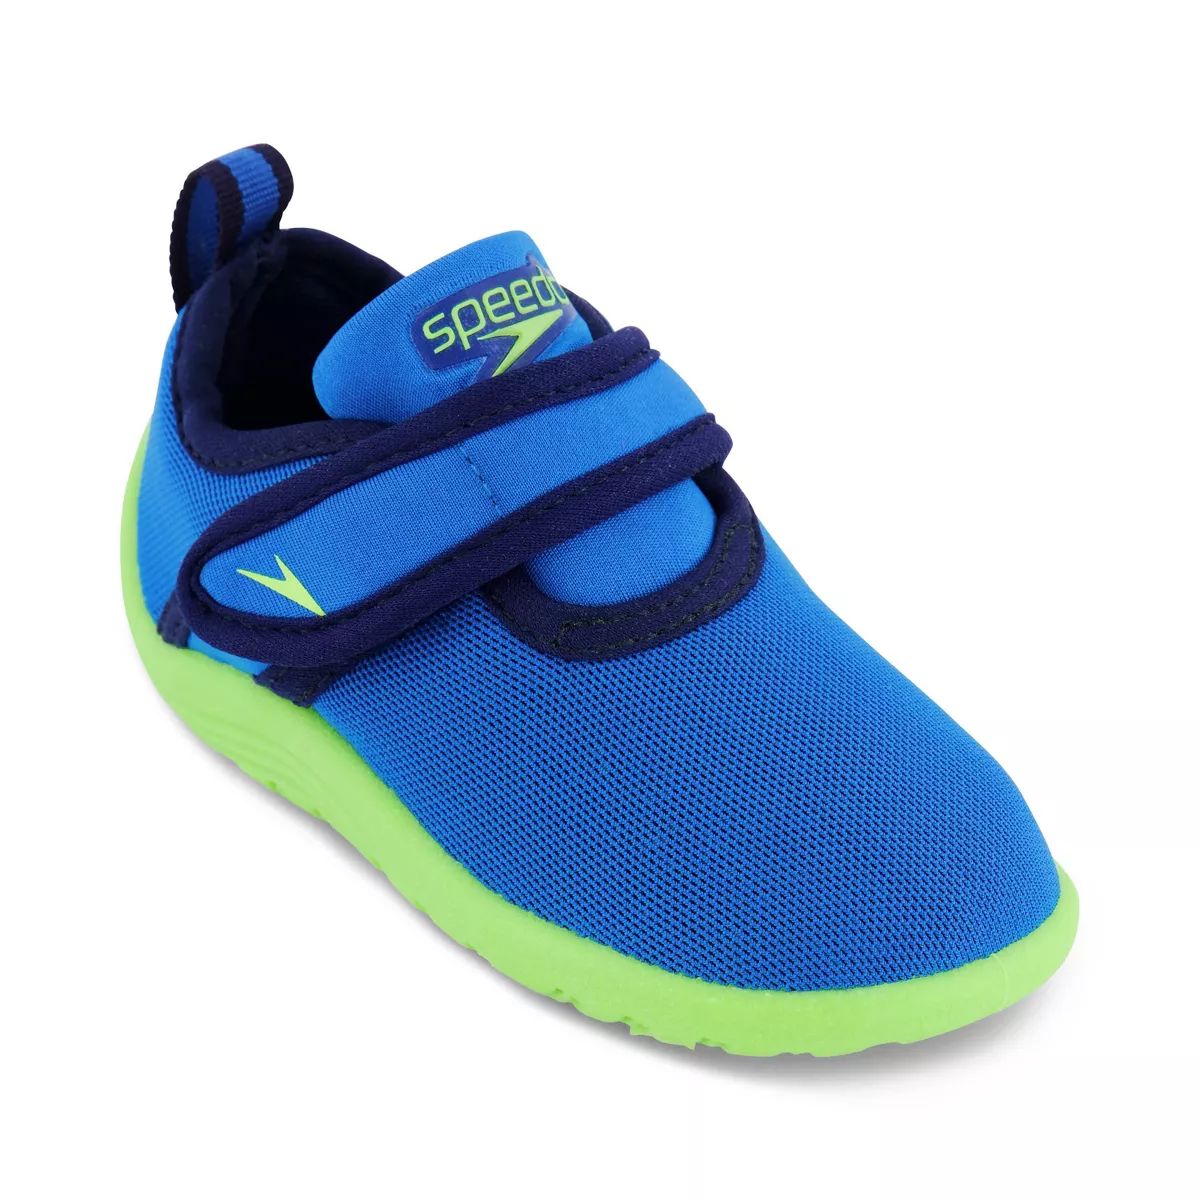 Speedo Toddler Solid Shore Explorer Water Shoes - Blue | Target